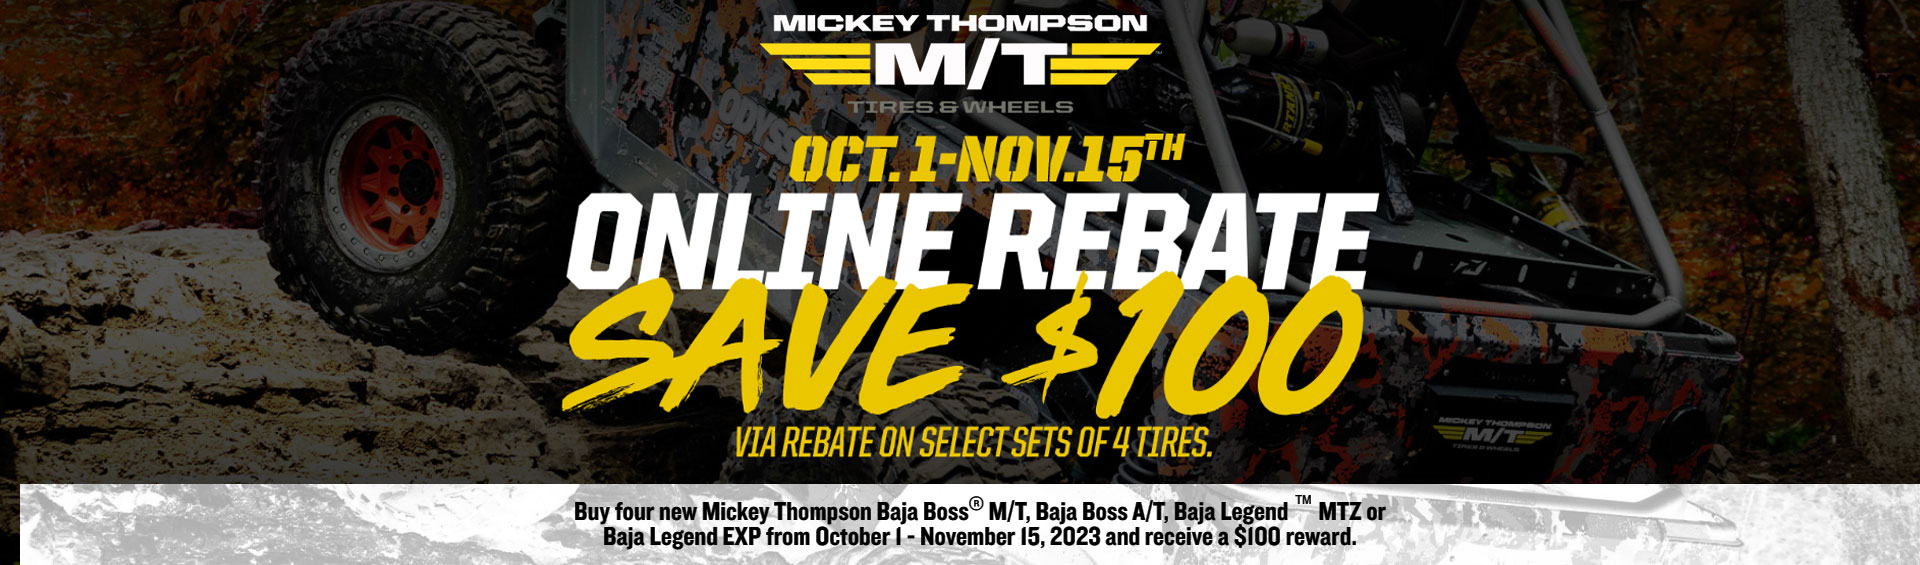 Mickey Thompson $100 Fall Rebate